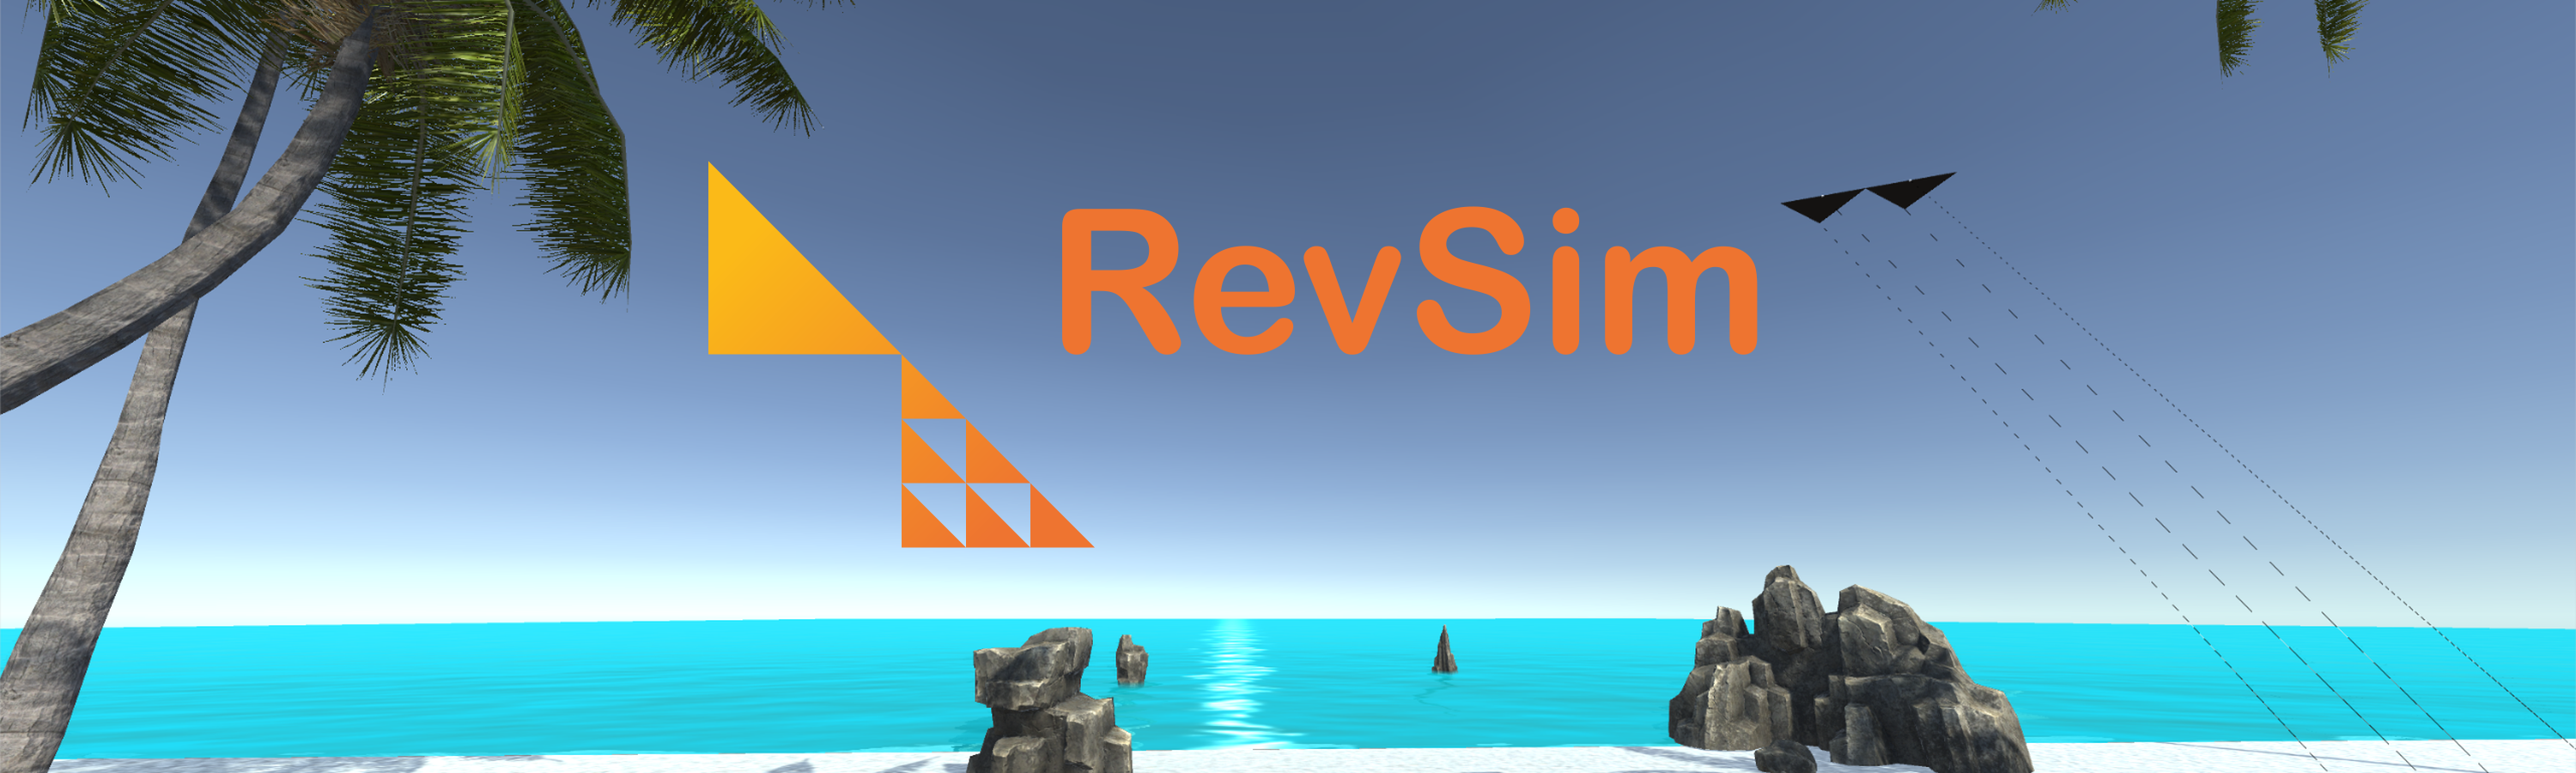 RevSim